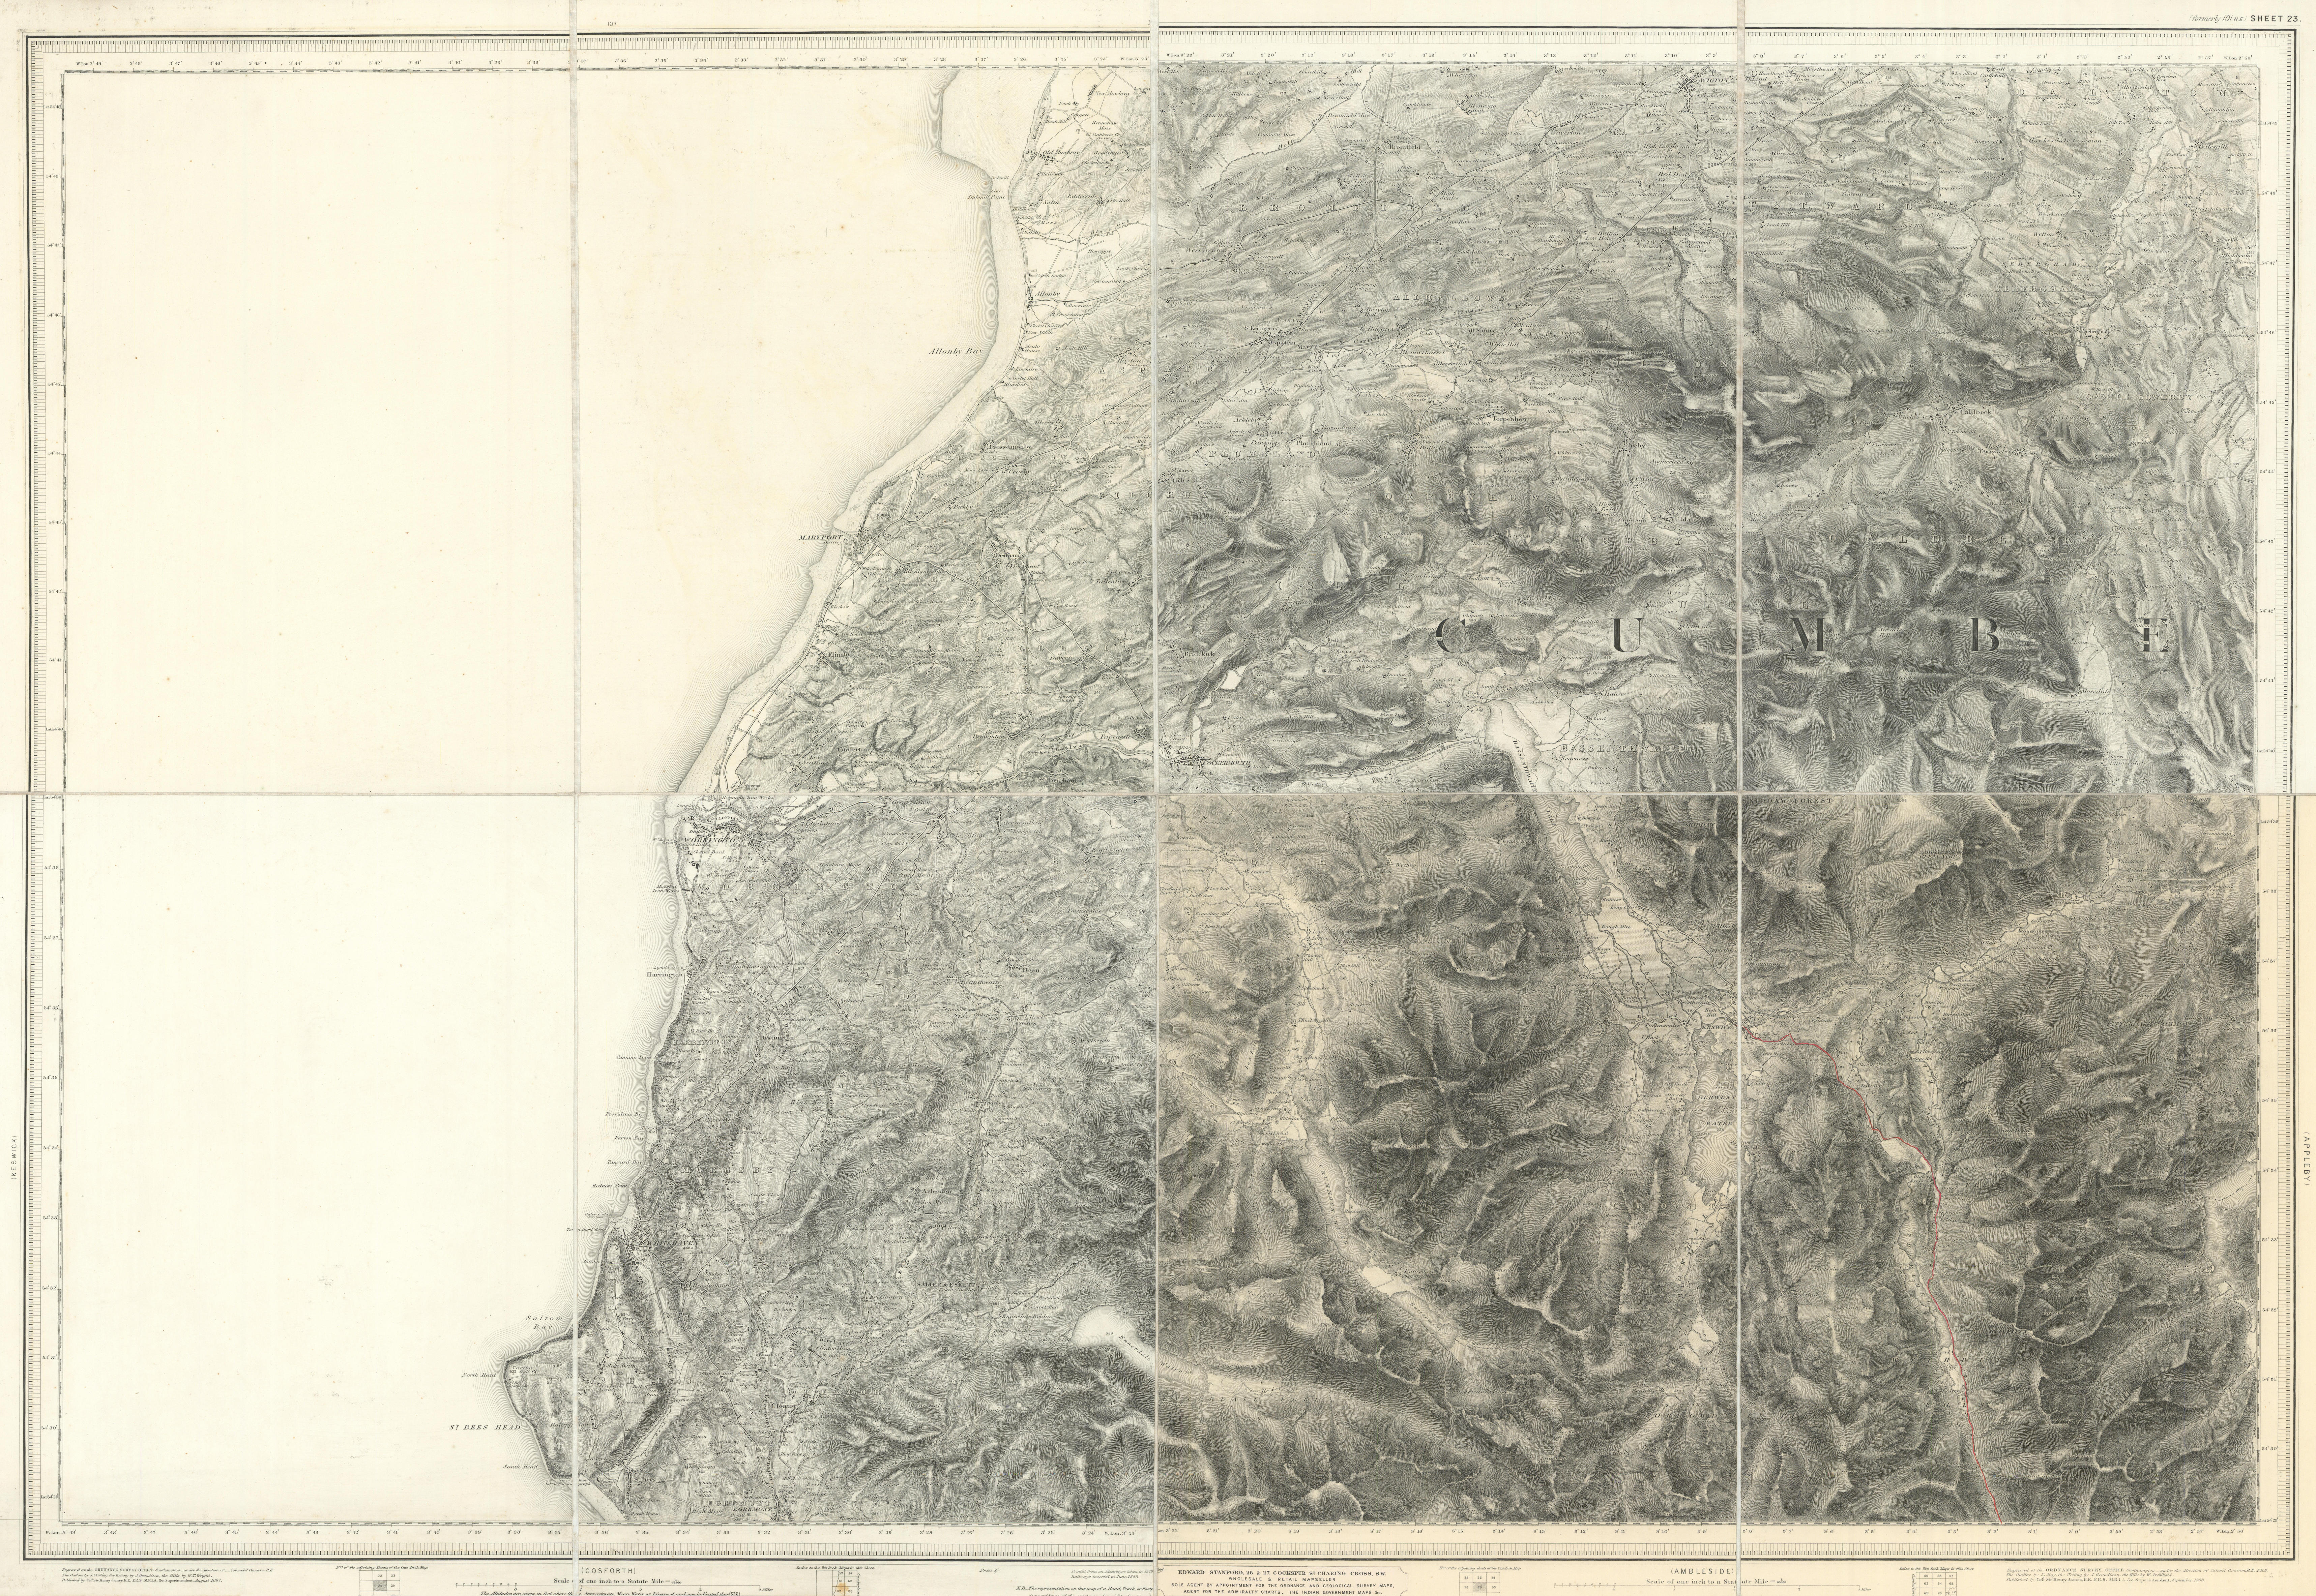 OS #101 North Lake District & Cumbria Coast. Keswick Buttermere 1888 old map